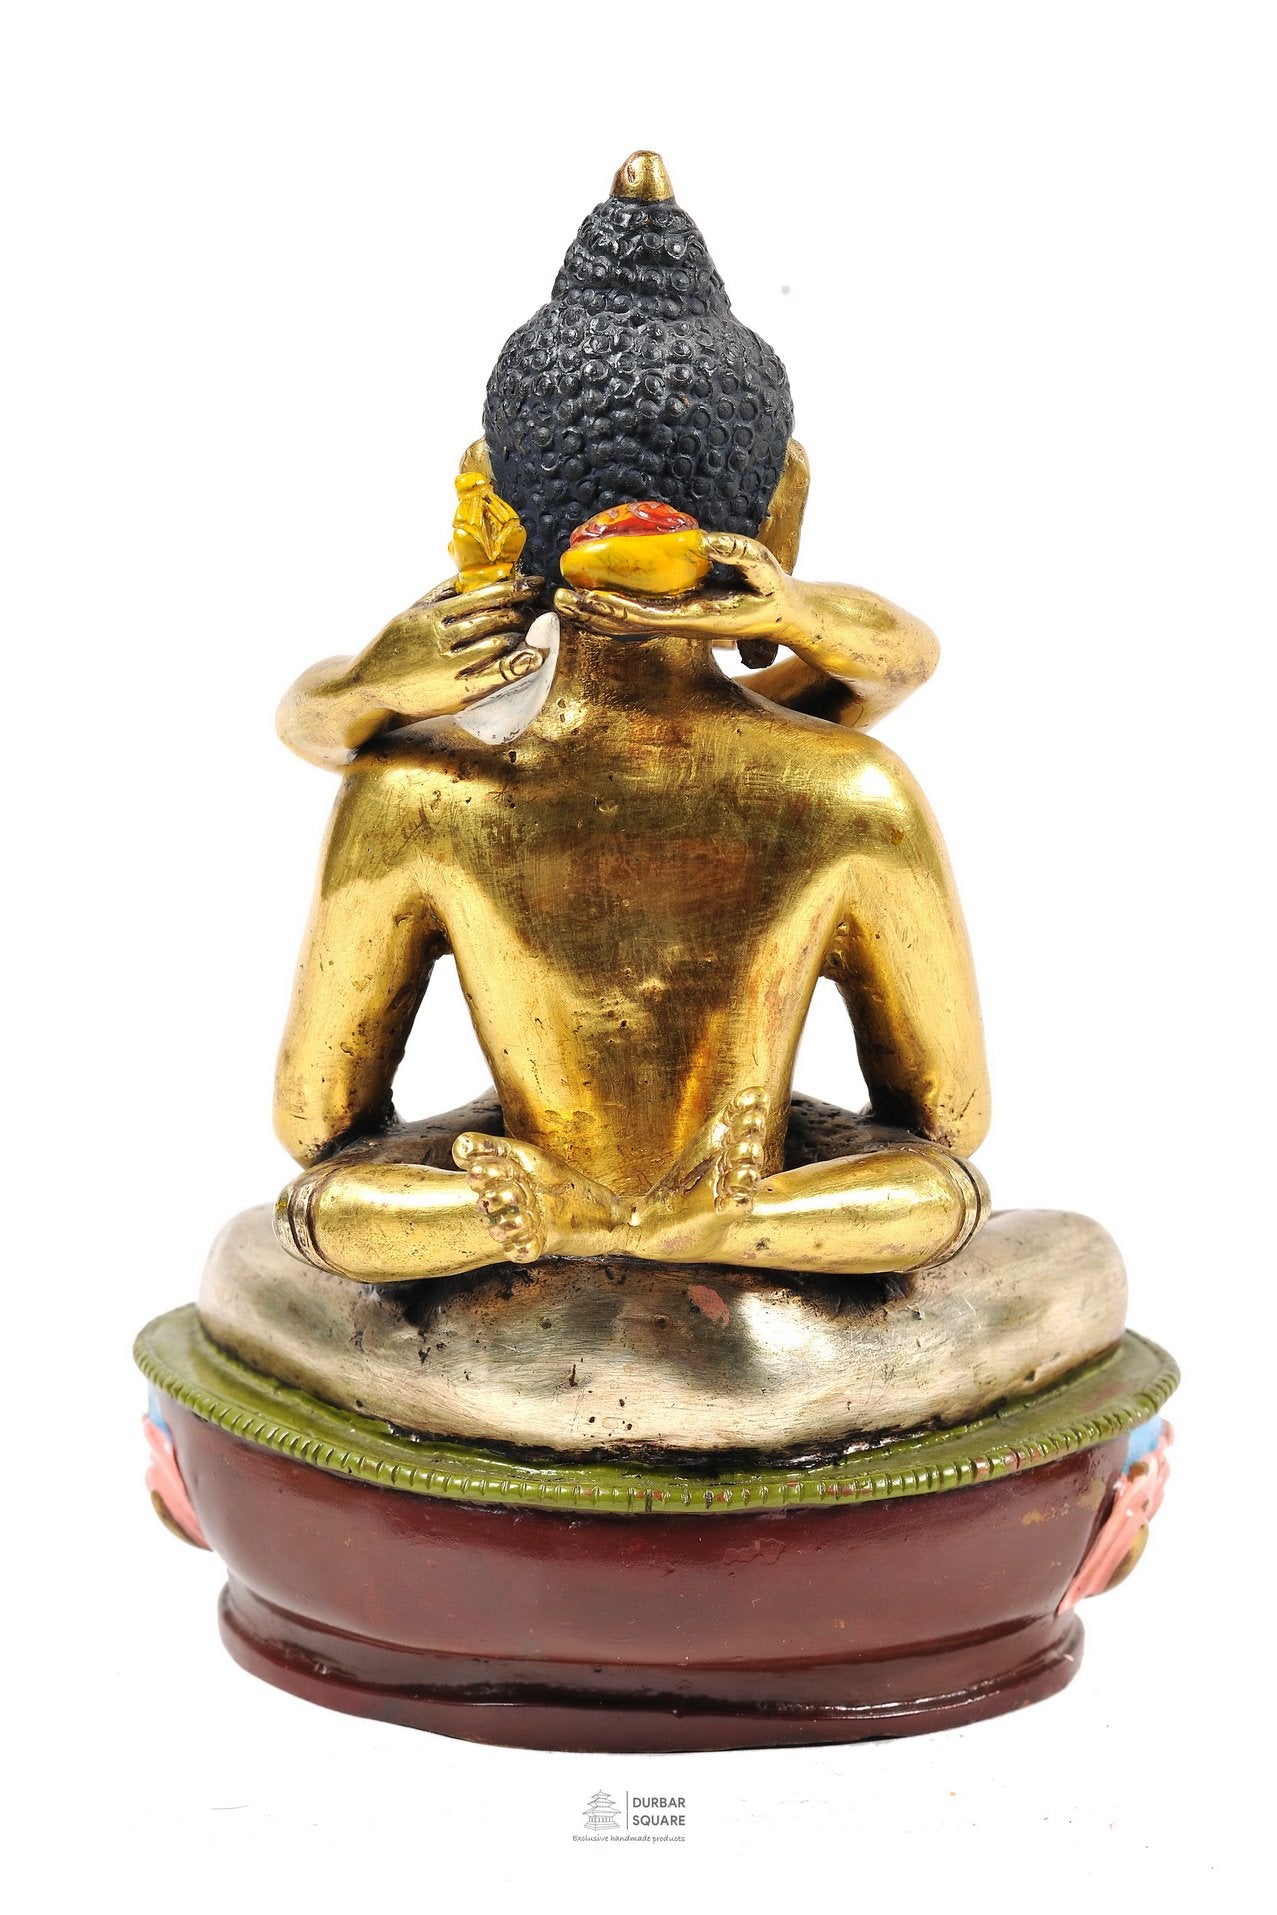 Gold plated Samantabhadra Buddha